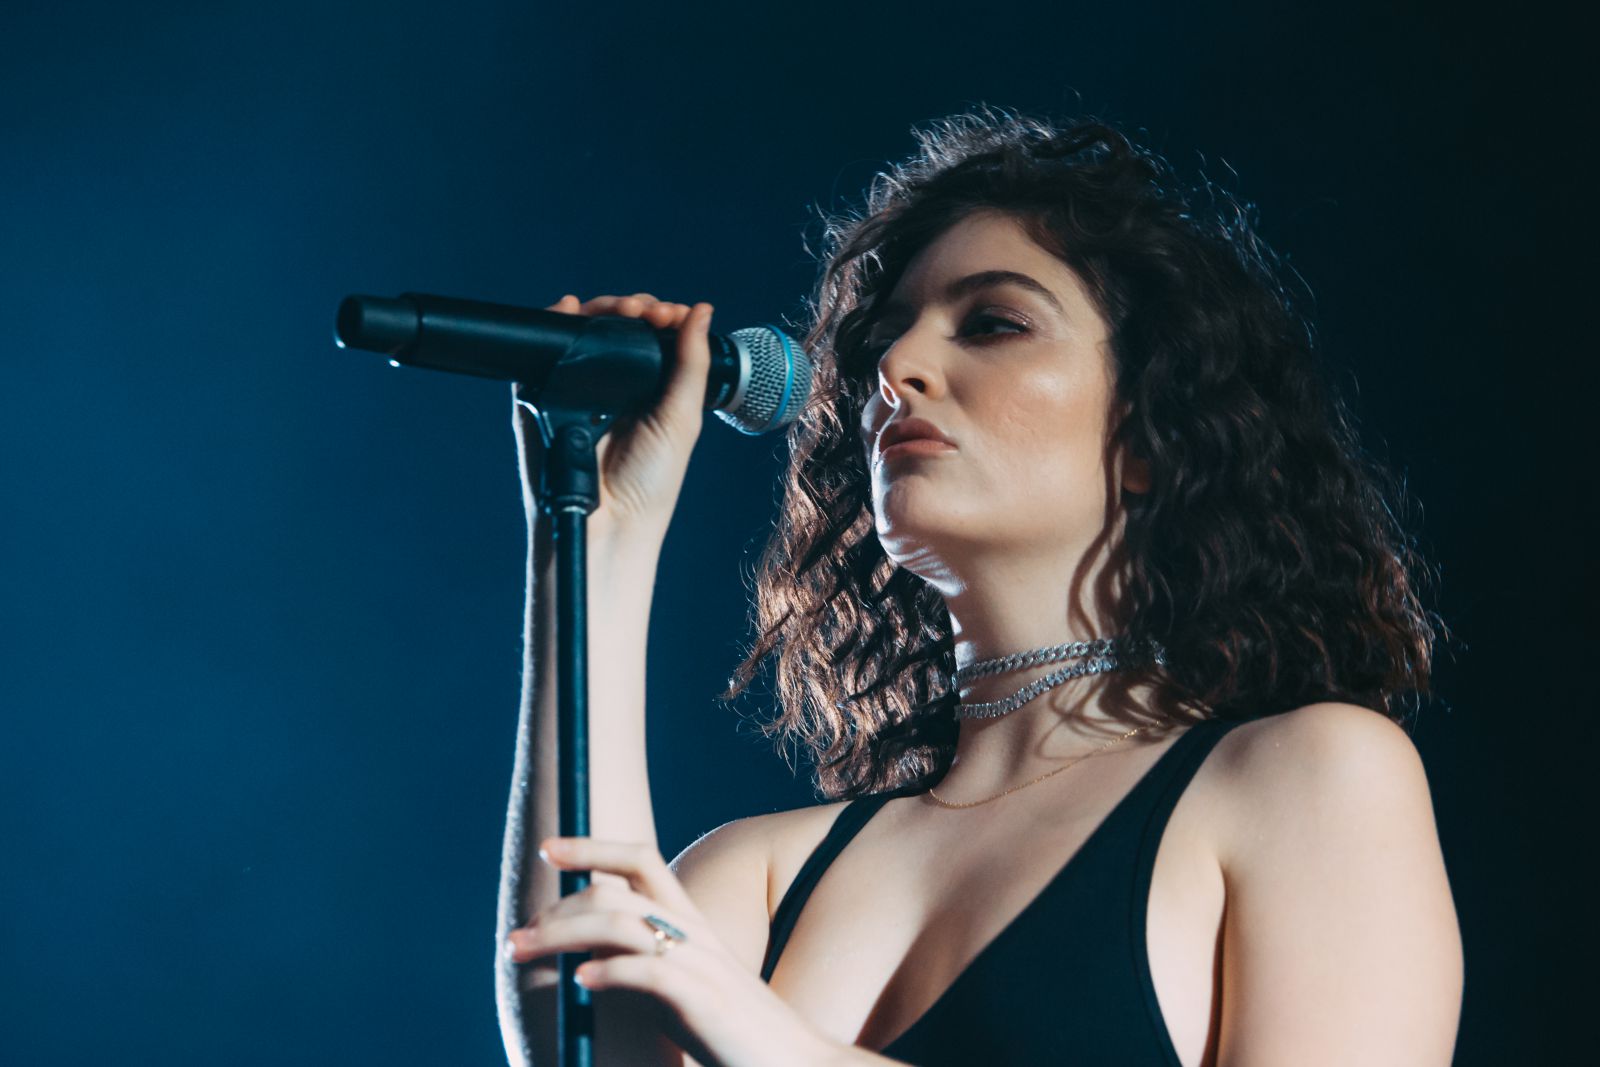 Lorde cantando no palco segurando microfone